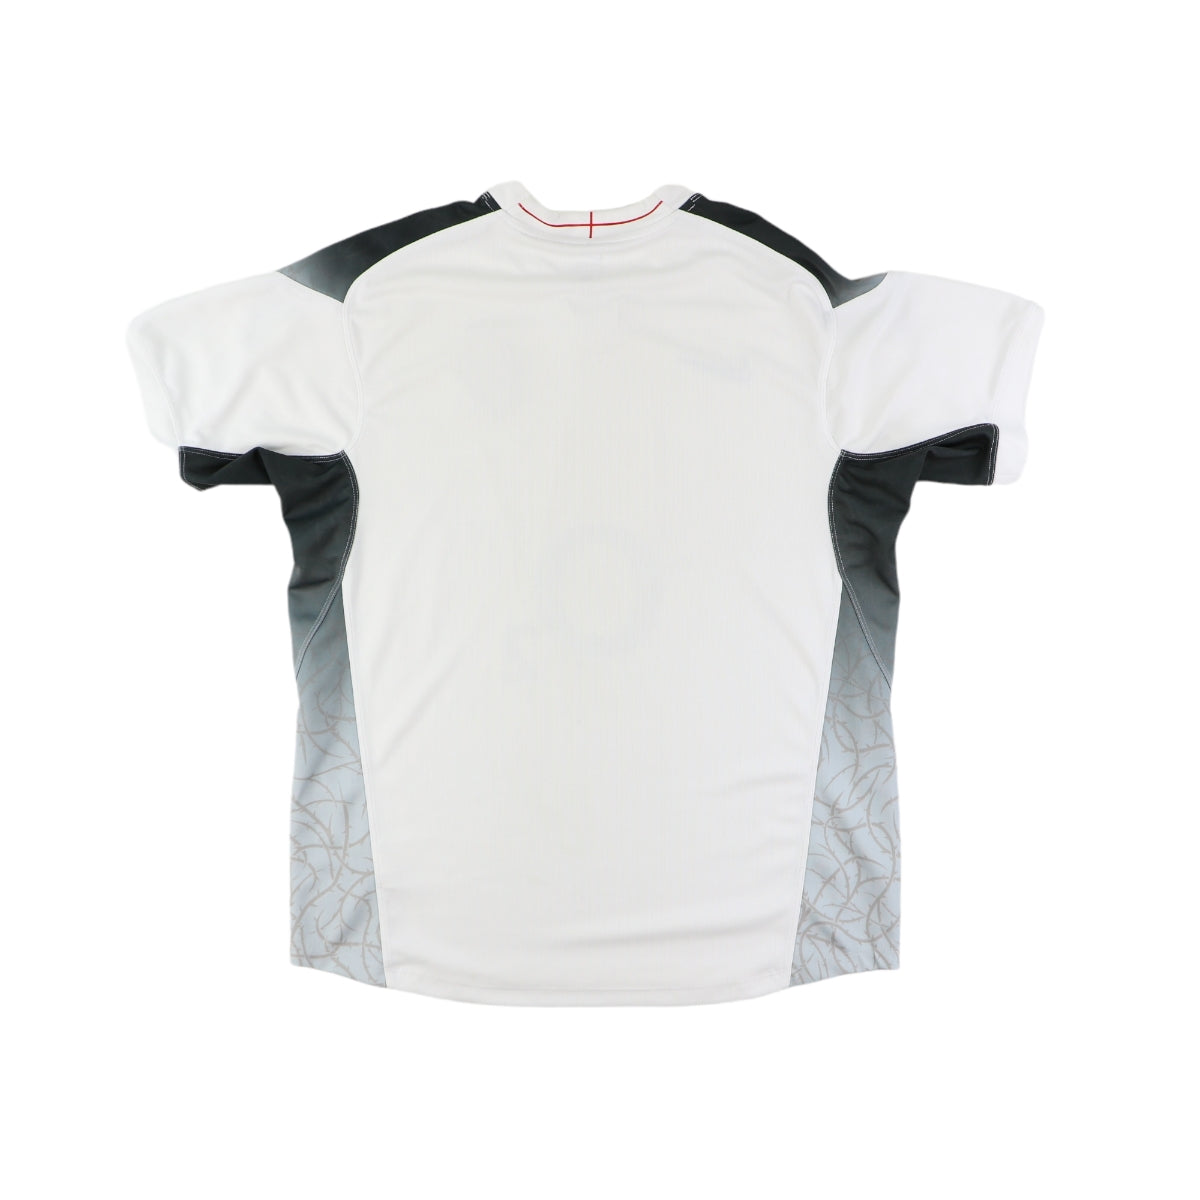 Nike Rugby Shirt (M)